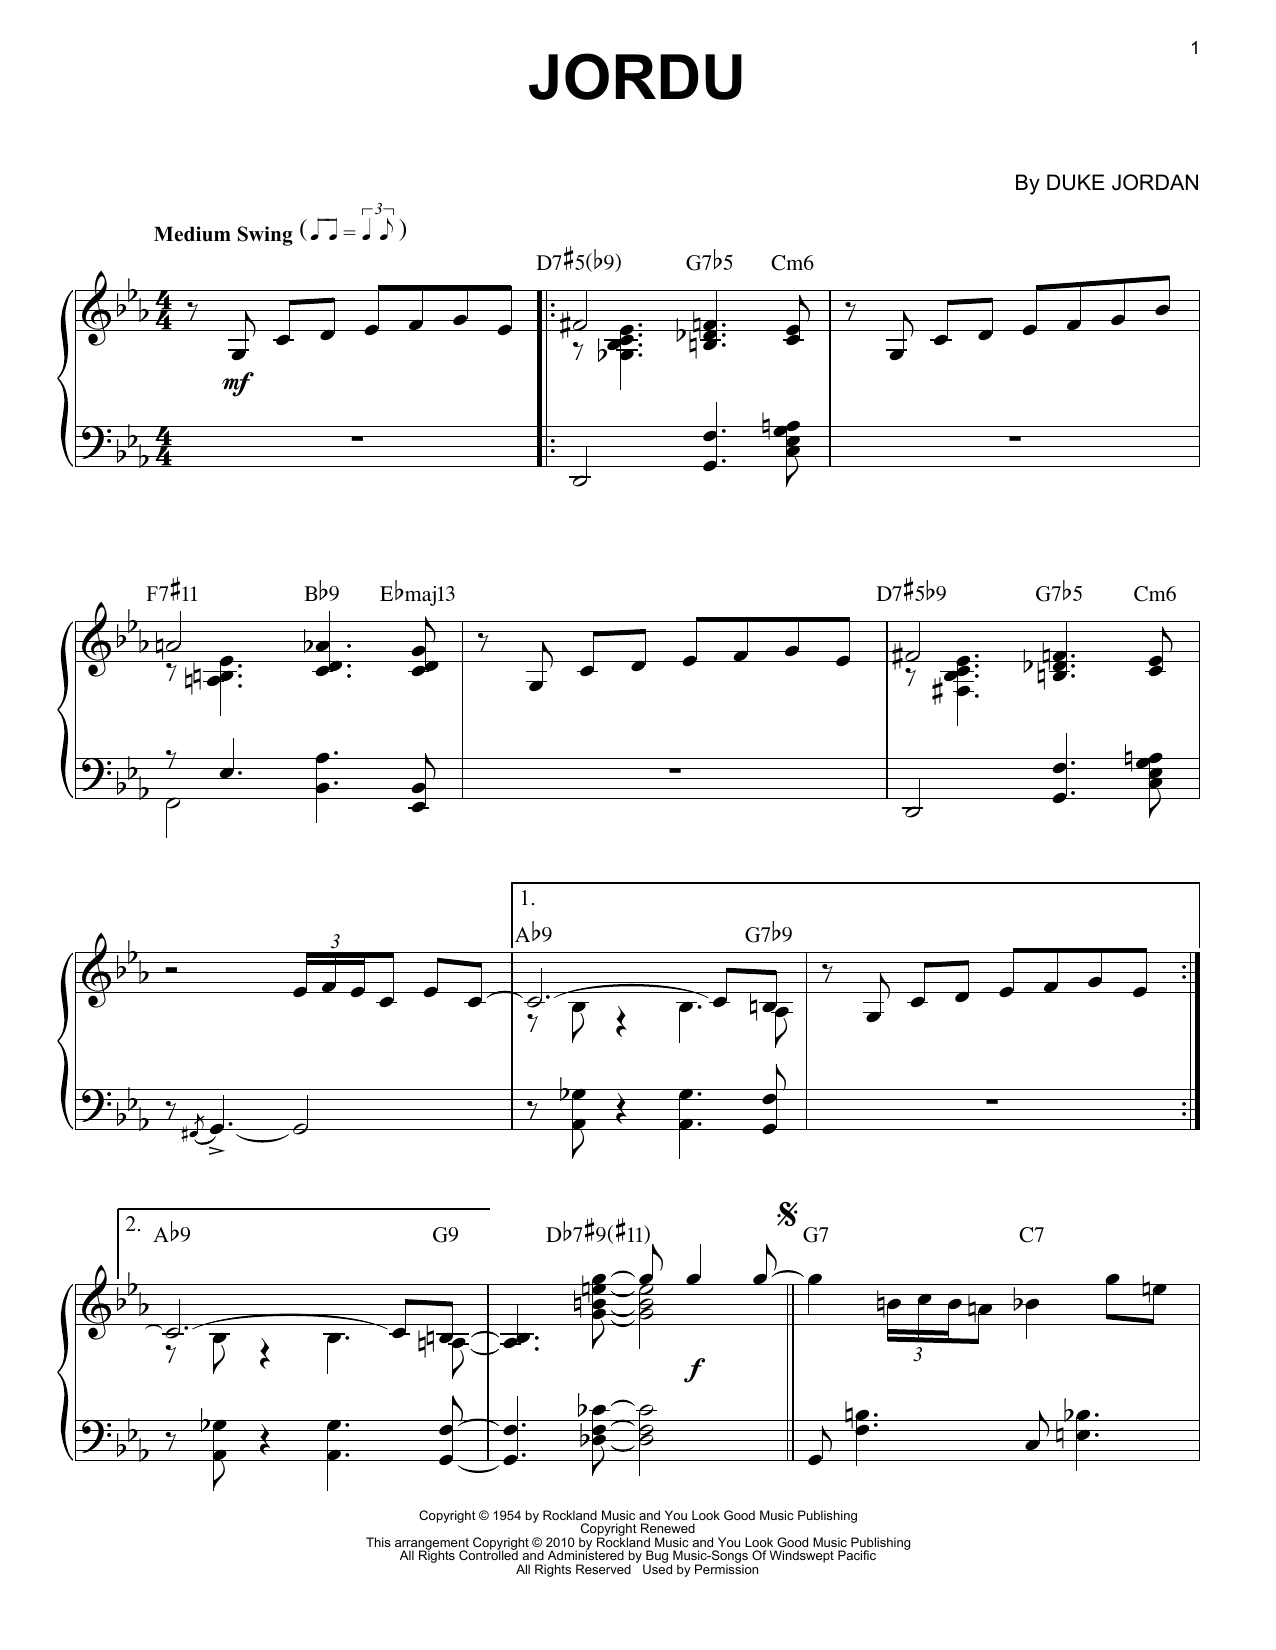 Download Duke Jordan Jordu Sheet Music and learn how to play Piano PDF digital score in minutes